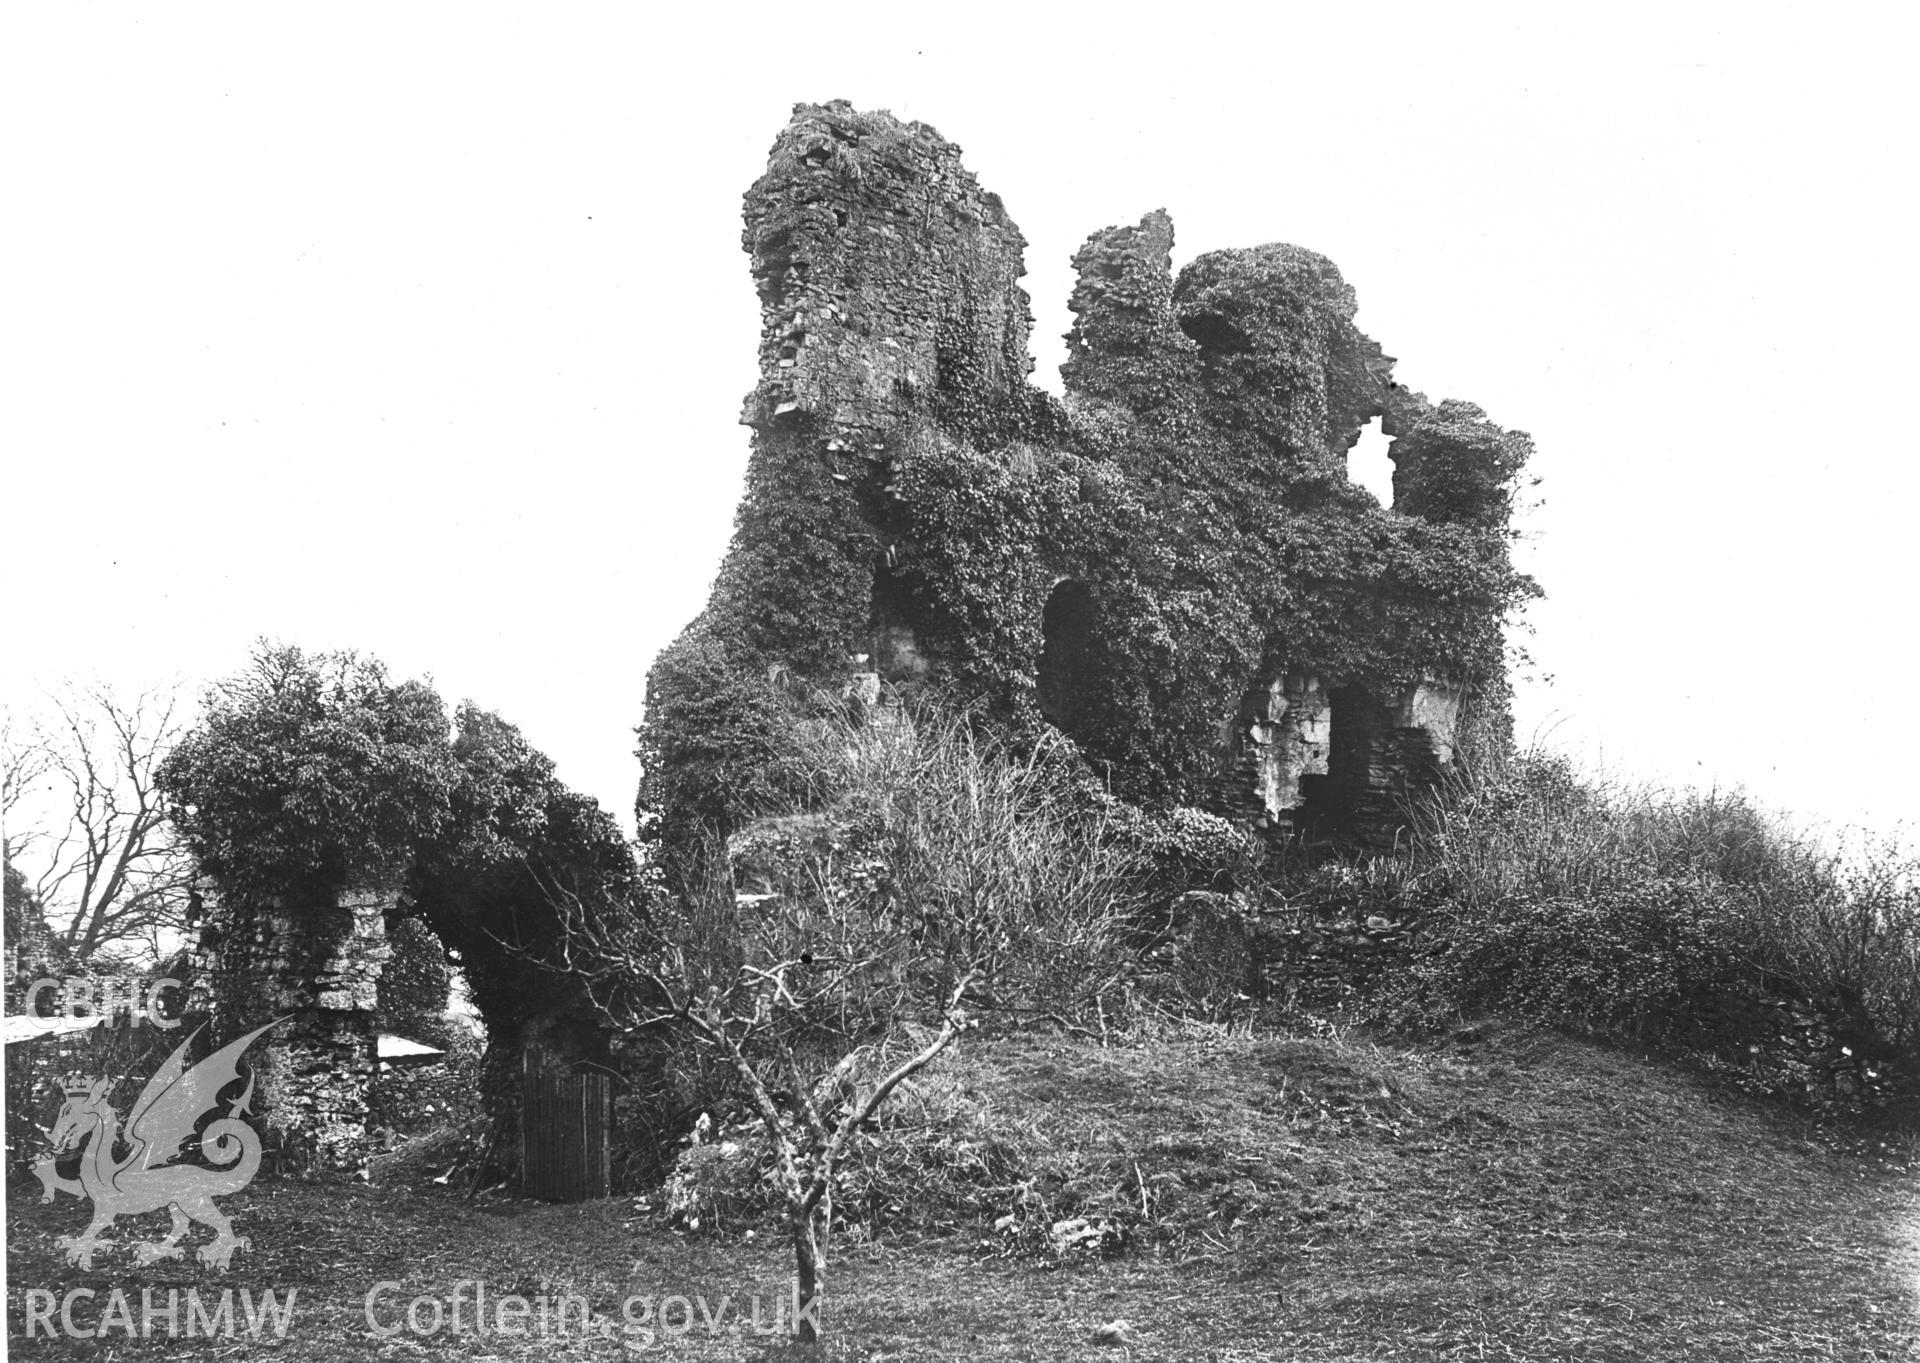 Photo showing Ogmore Castle